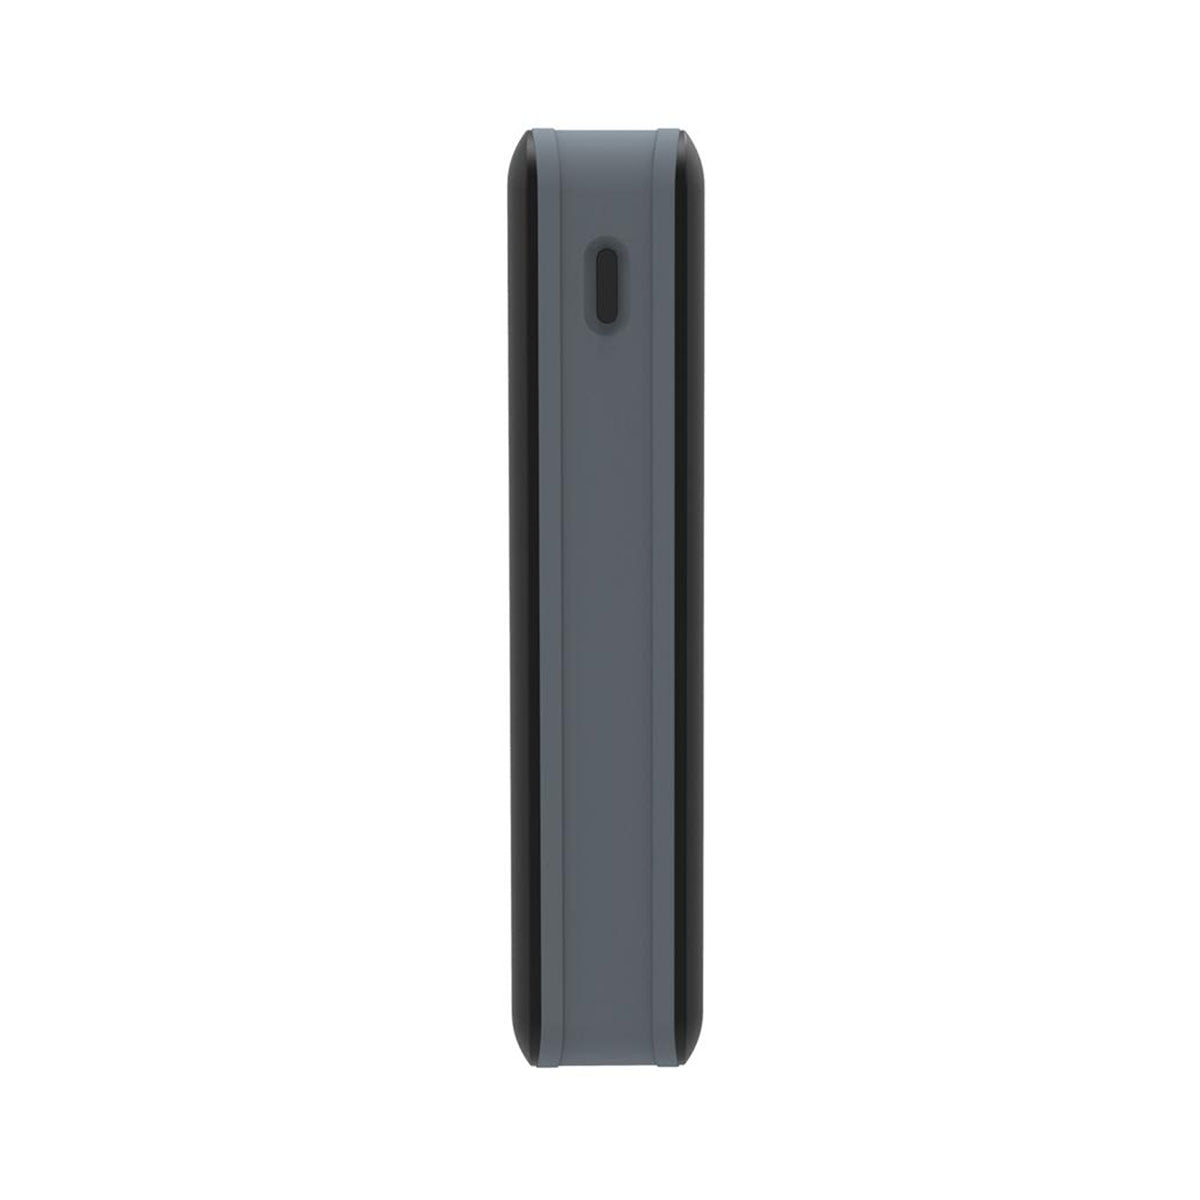 Cygnett Chargeup Ultra 20000 Mah 4.8A Powerbank - Black/Grey